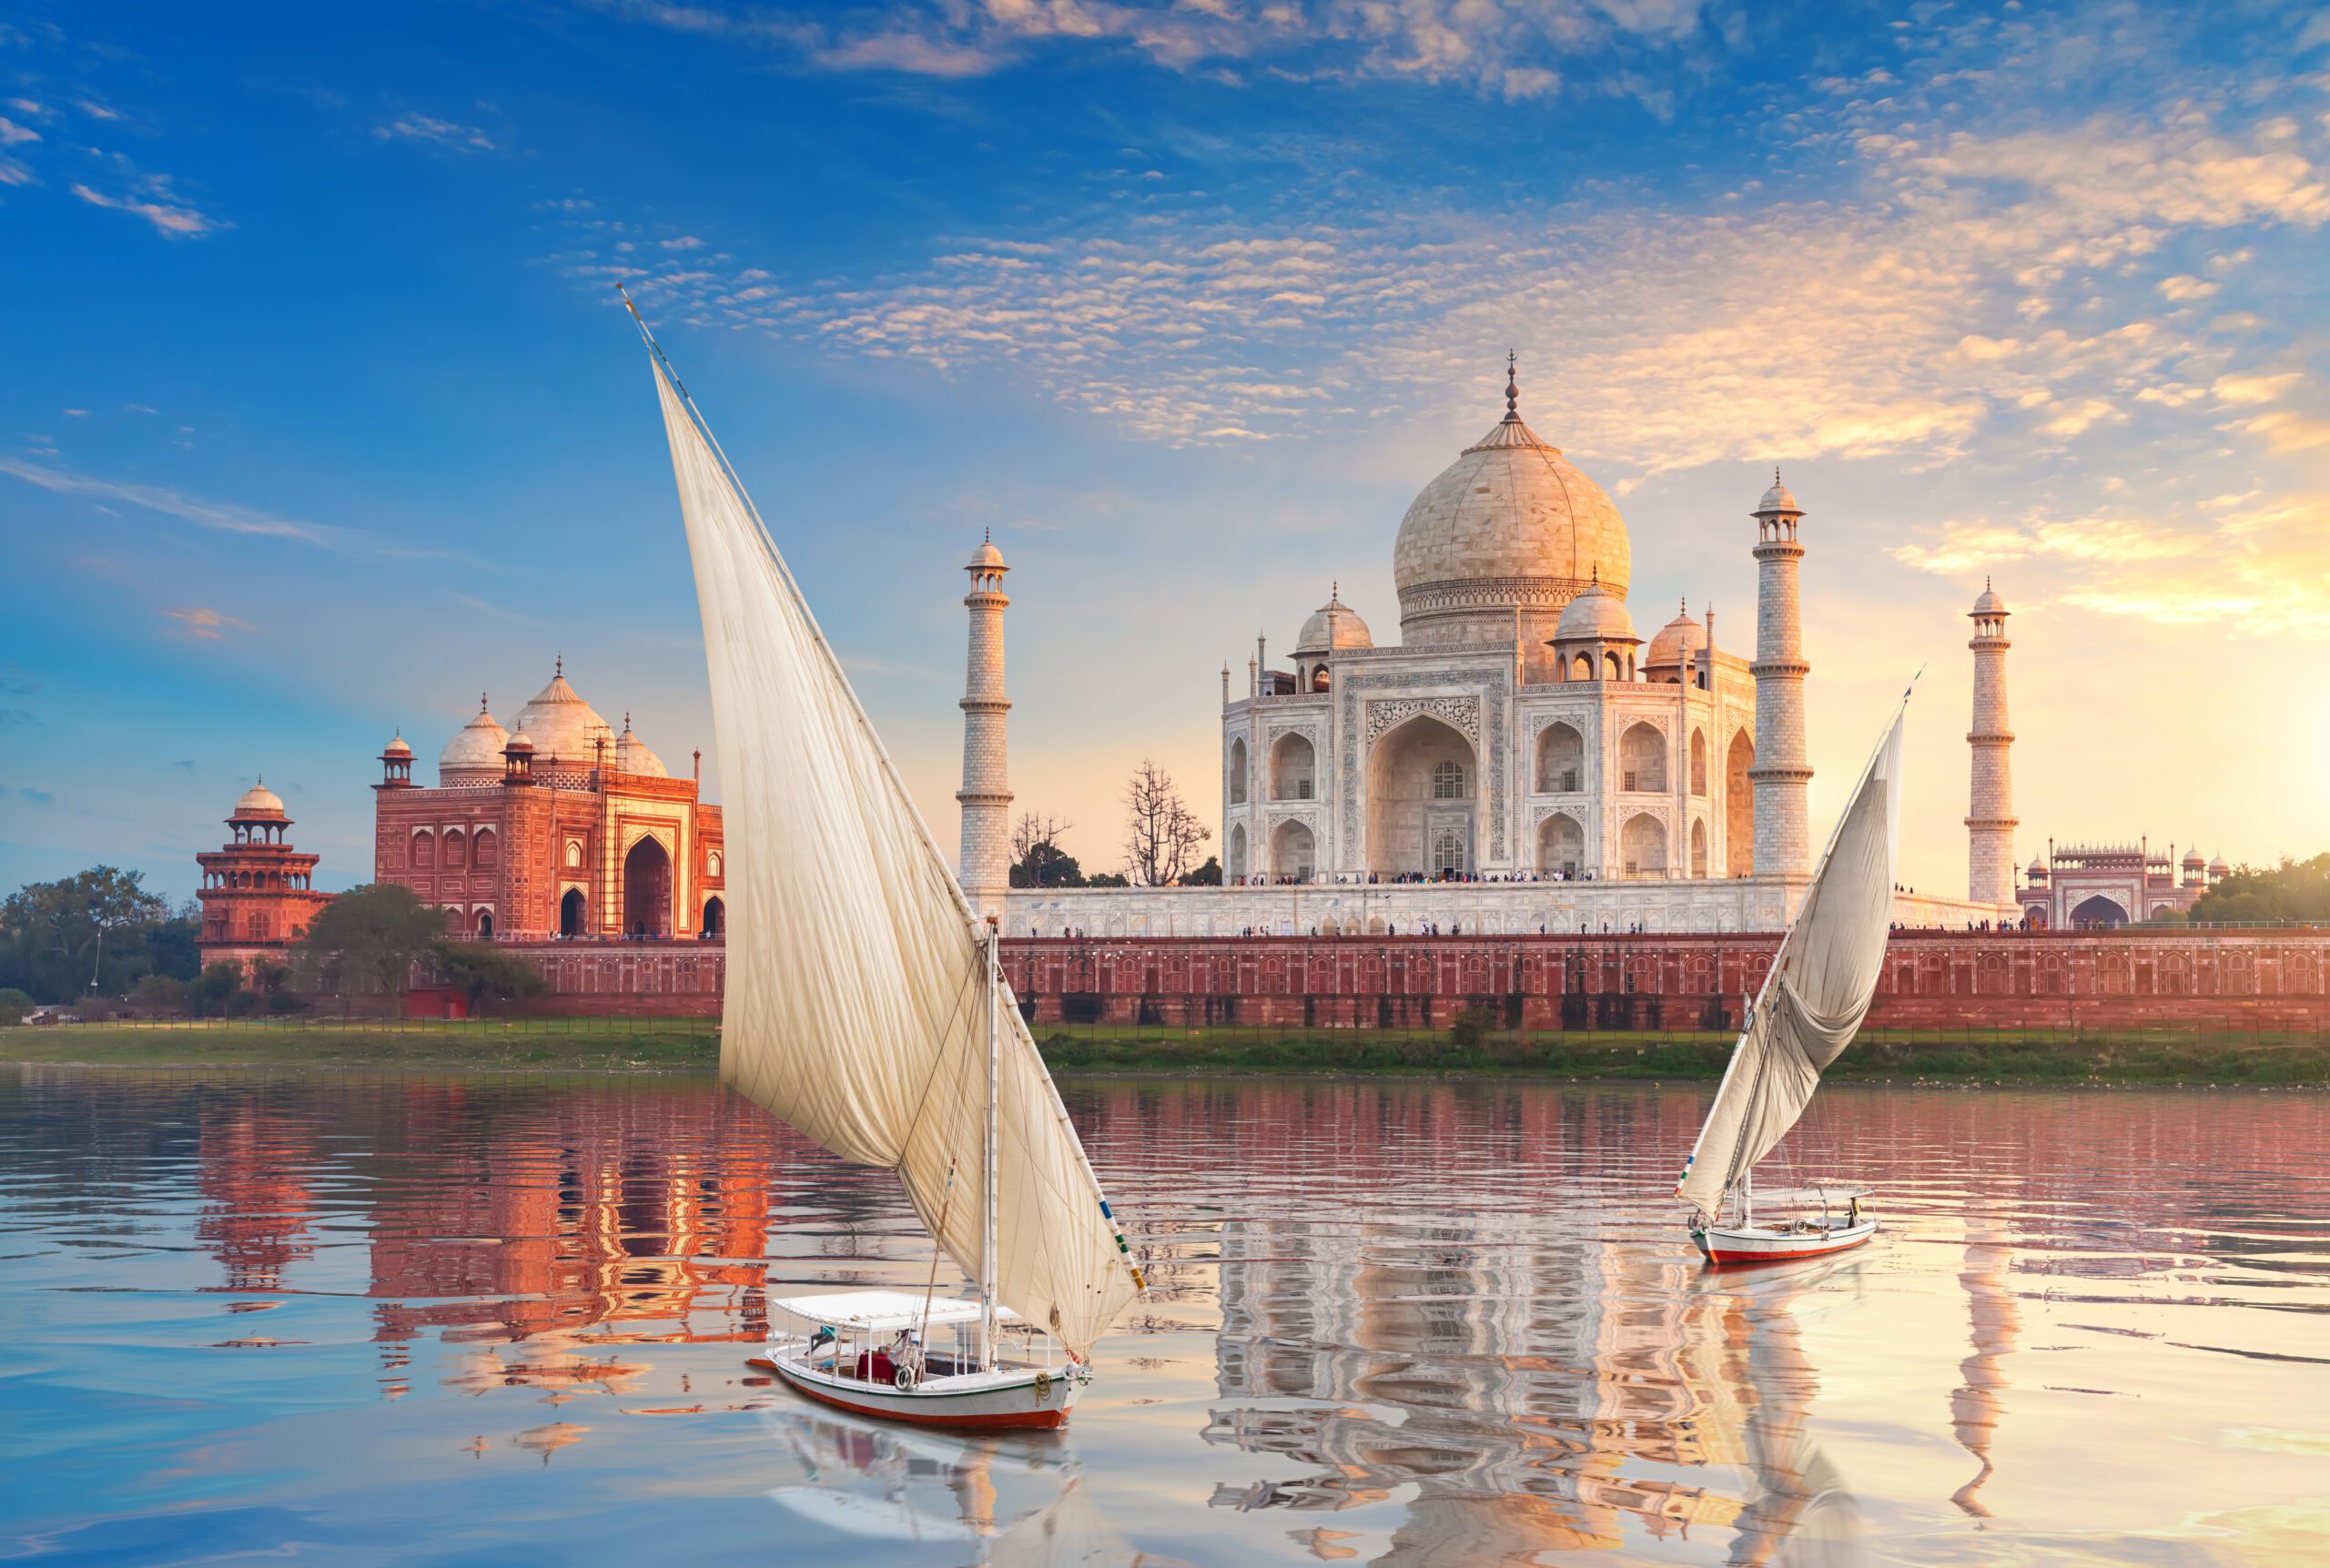 Famous Taj Mahal complex, the Yamuna river and boats, beautiful sunset, Agra, India